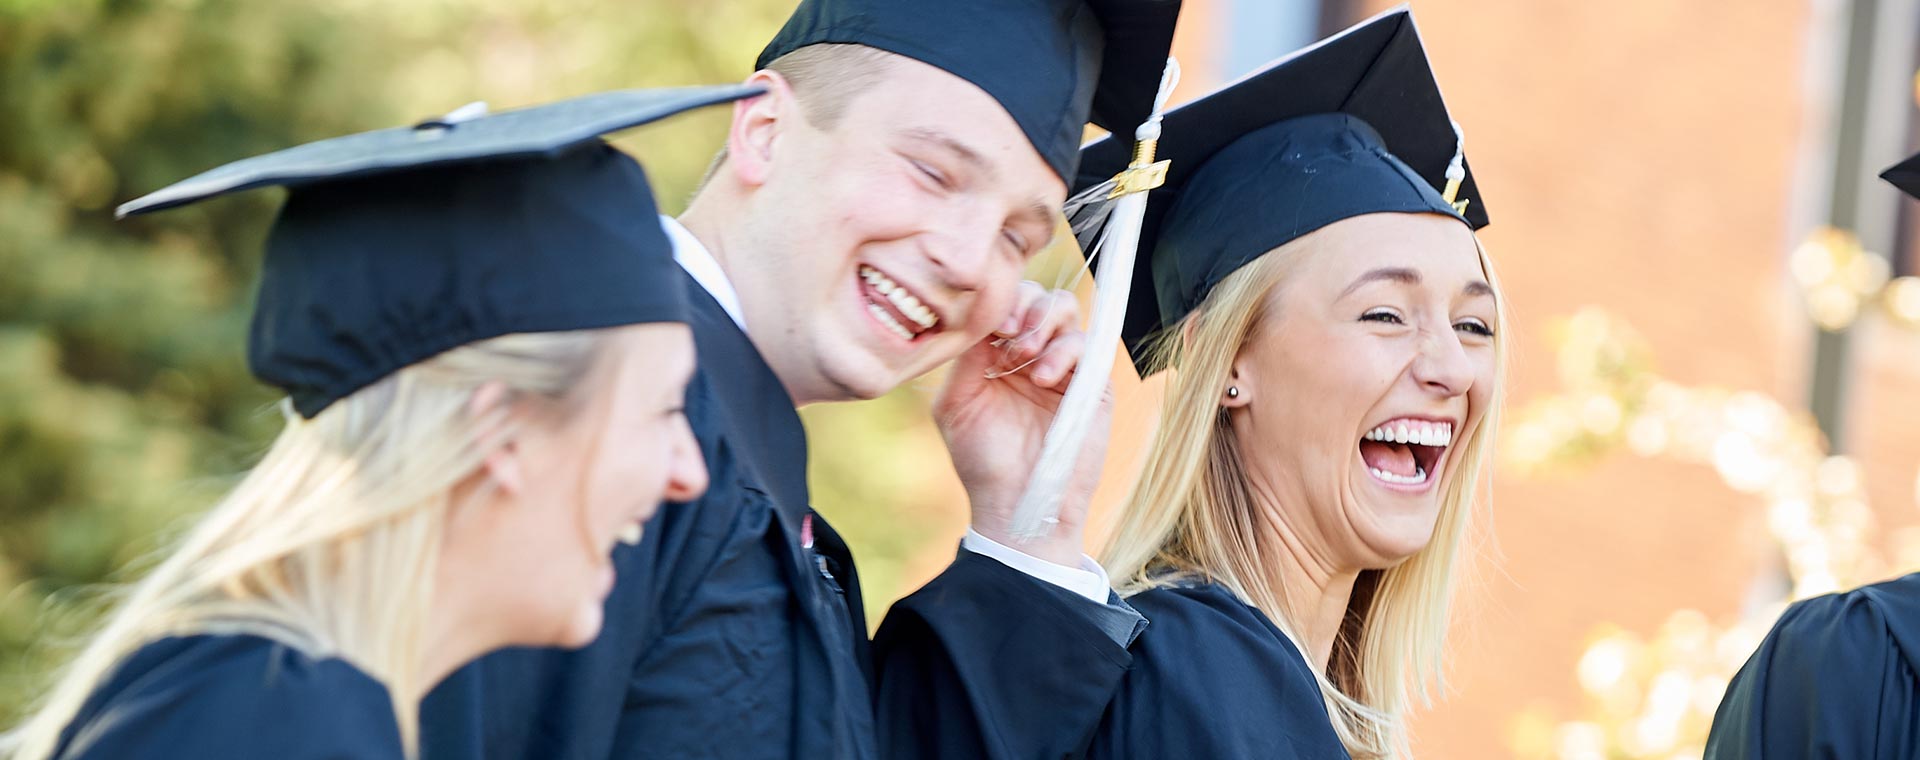 99% of recent grads got jobs or started grad school within 6 months of graduation.